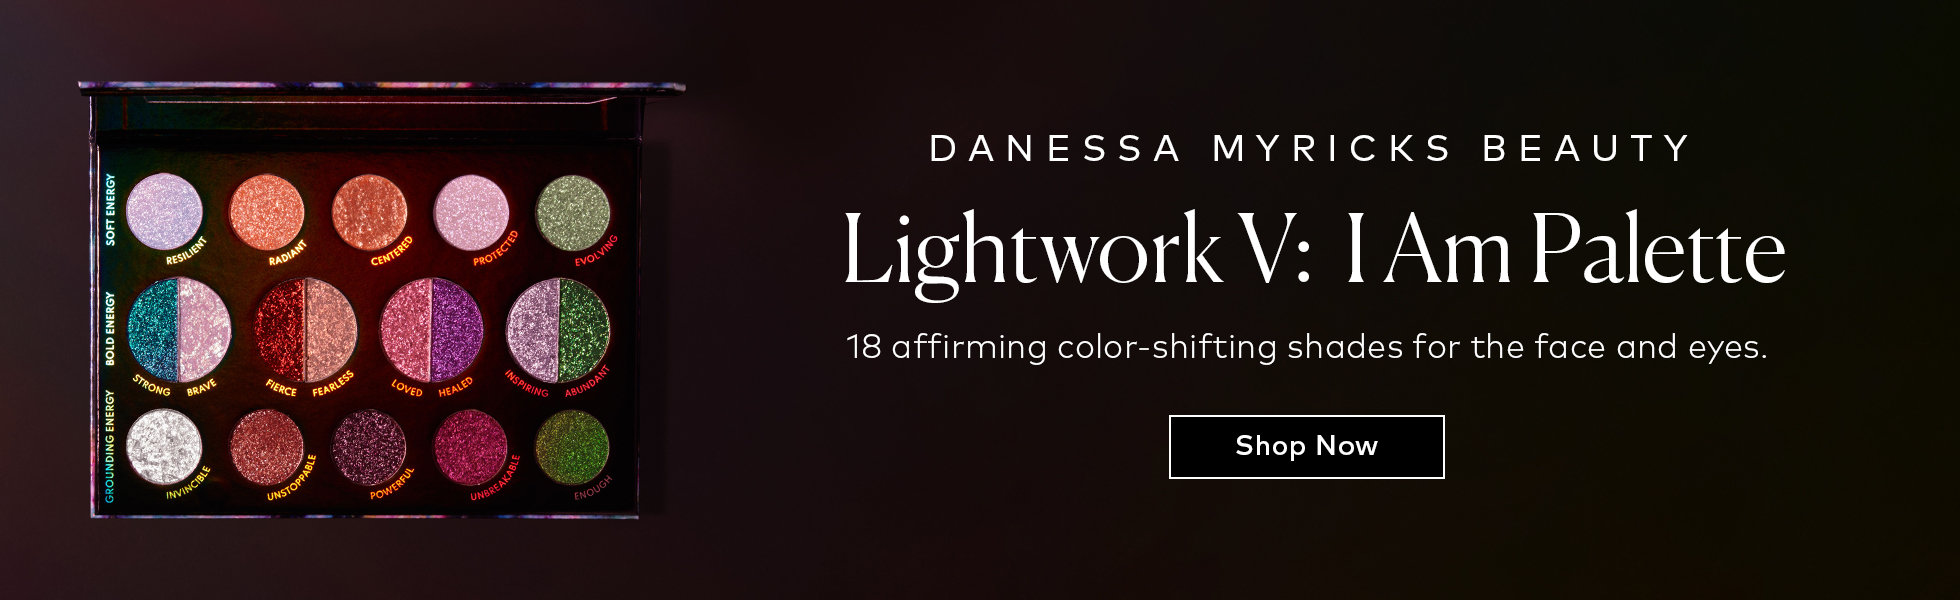 Danessa Myricks Beauty Flexi-Palette